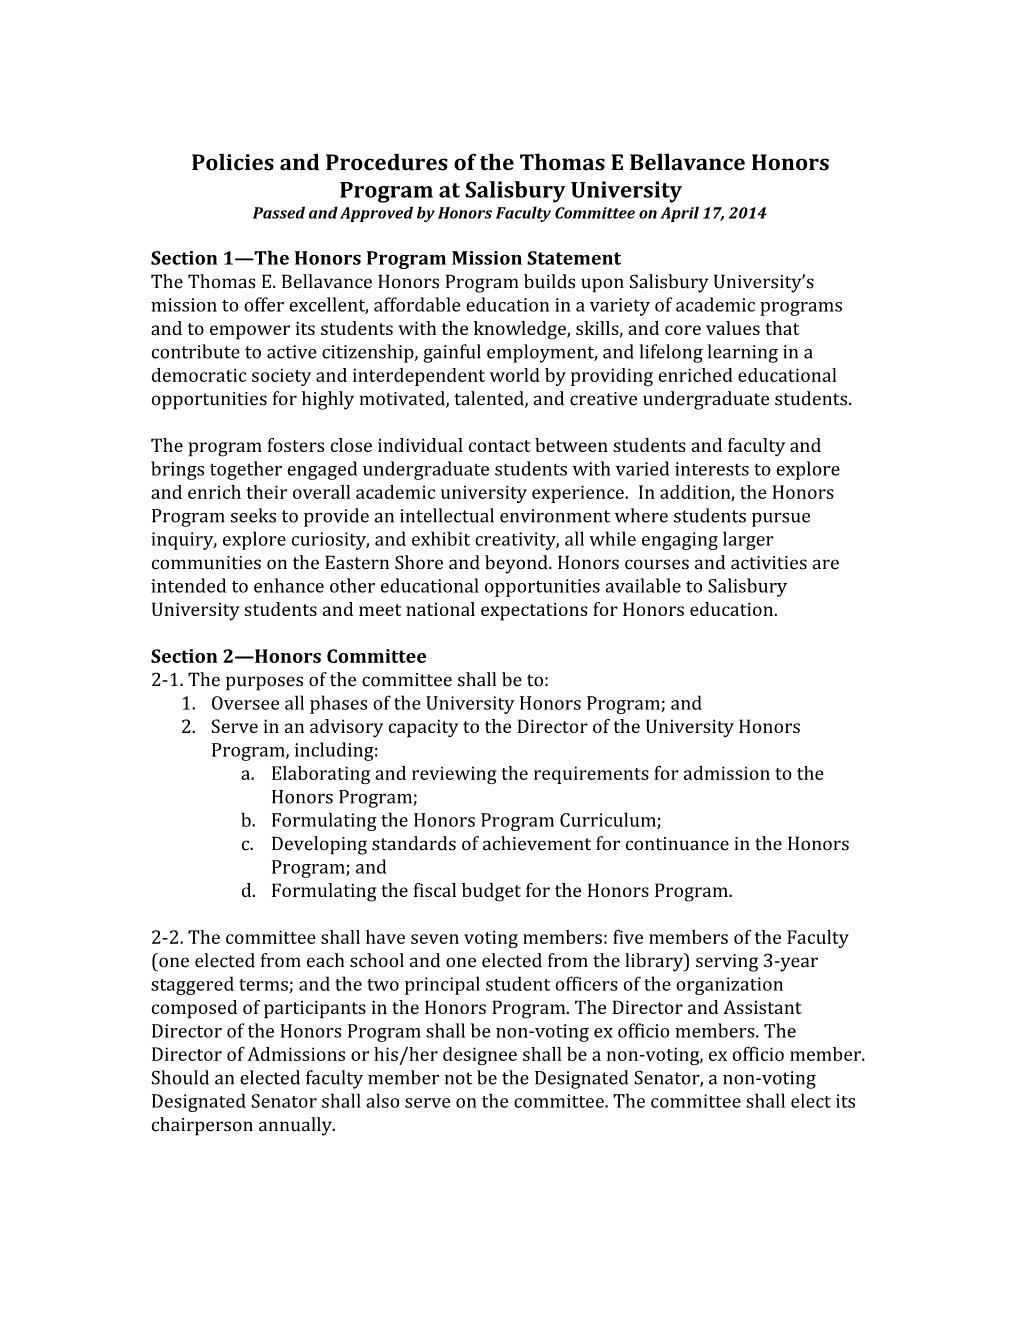 Policies and Procedures of the Thomas E Bellavance Honors Program at Salisbury University